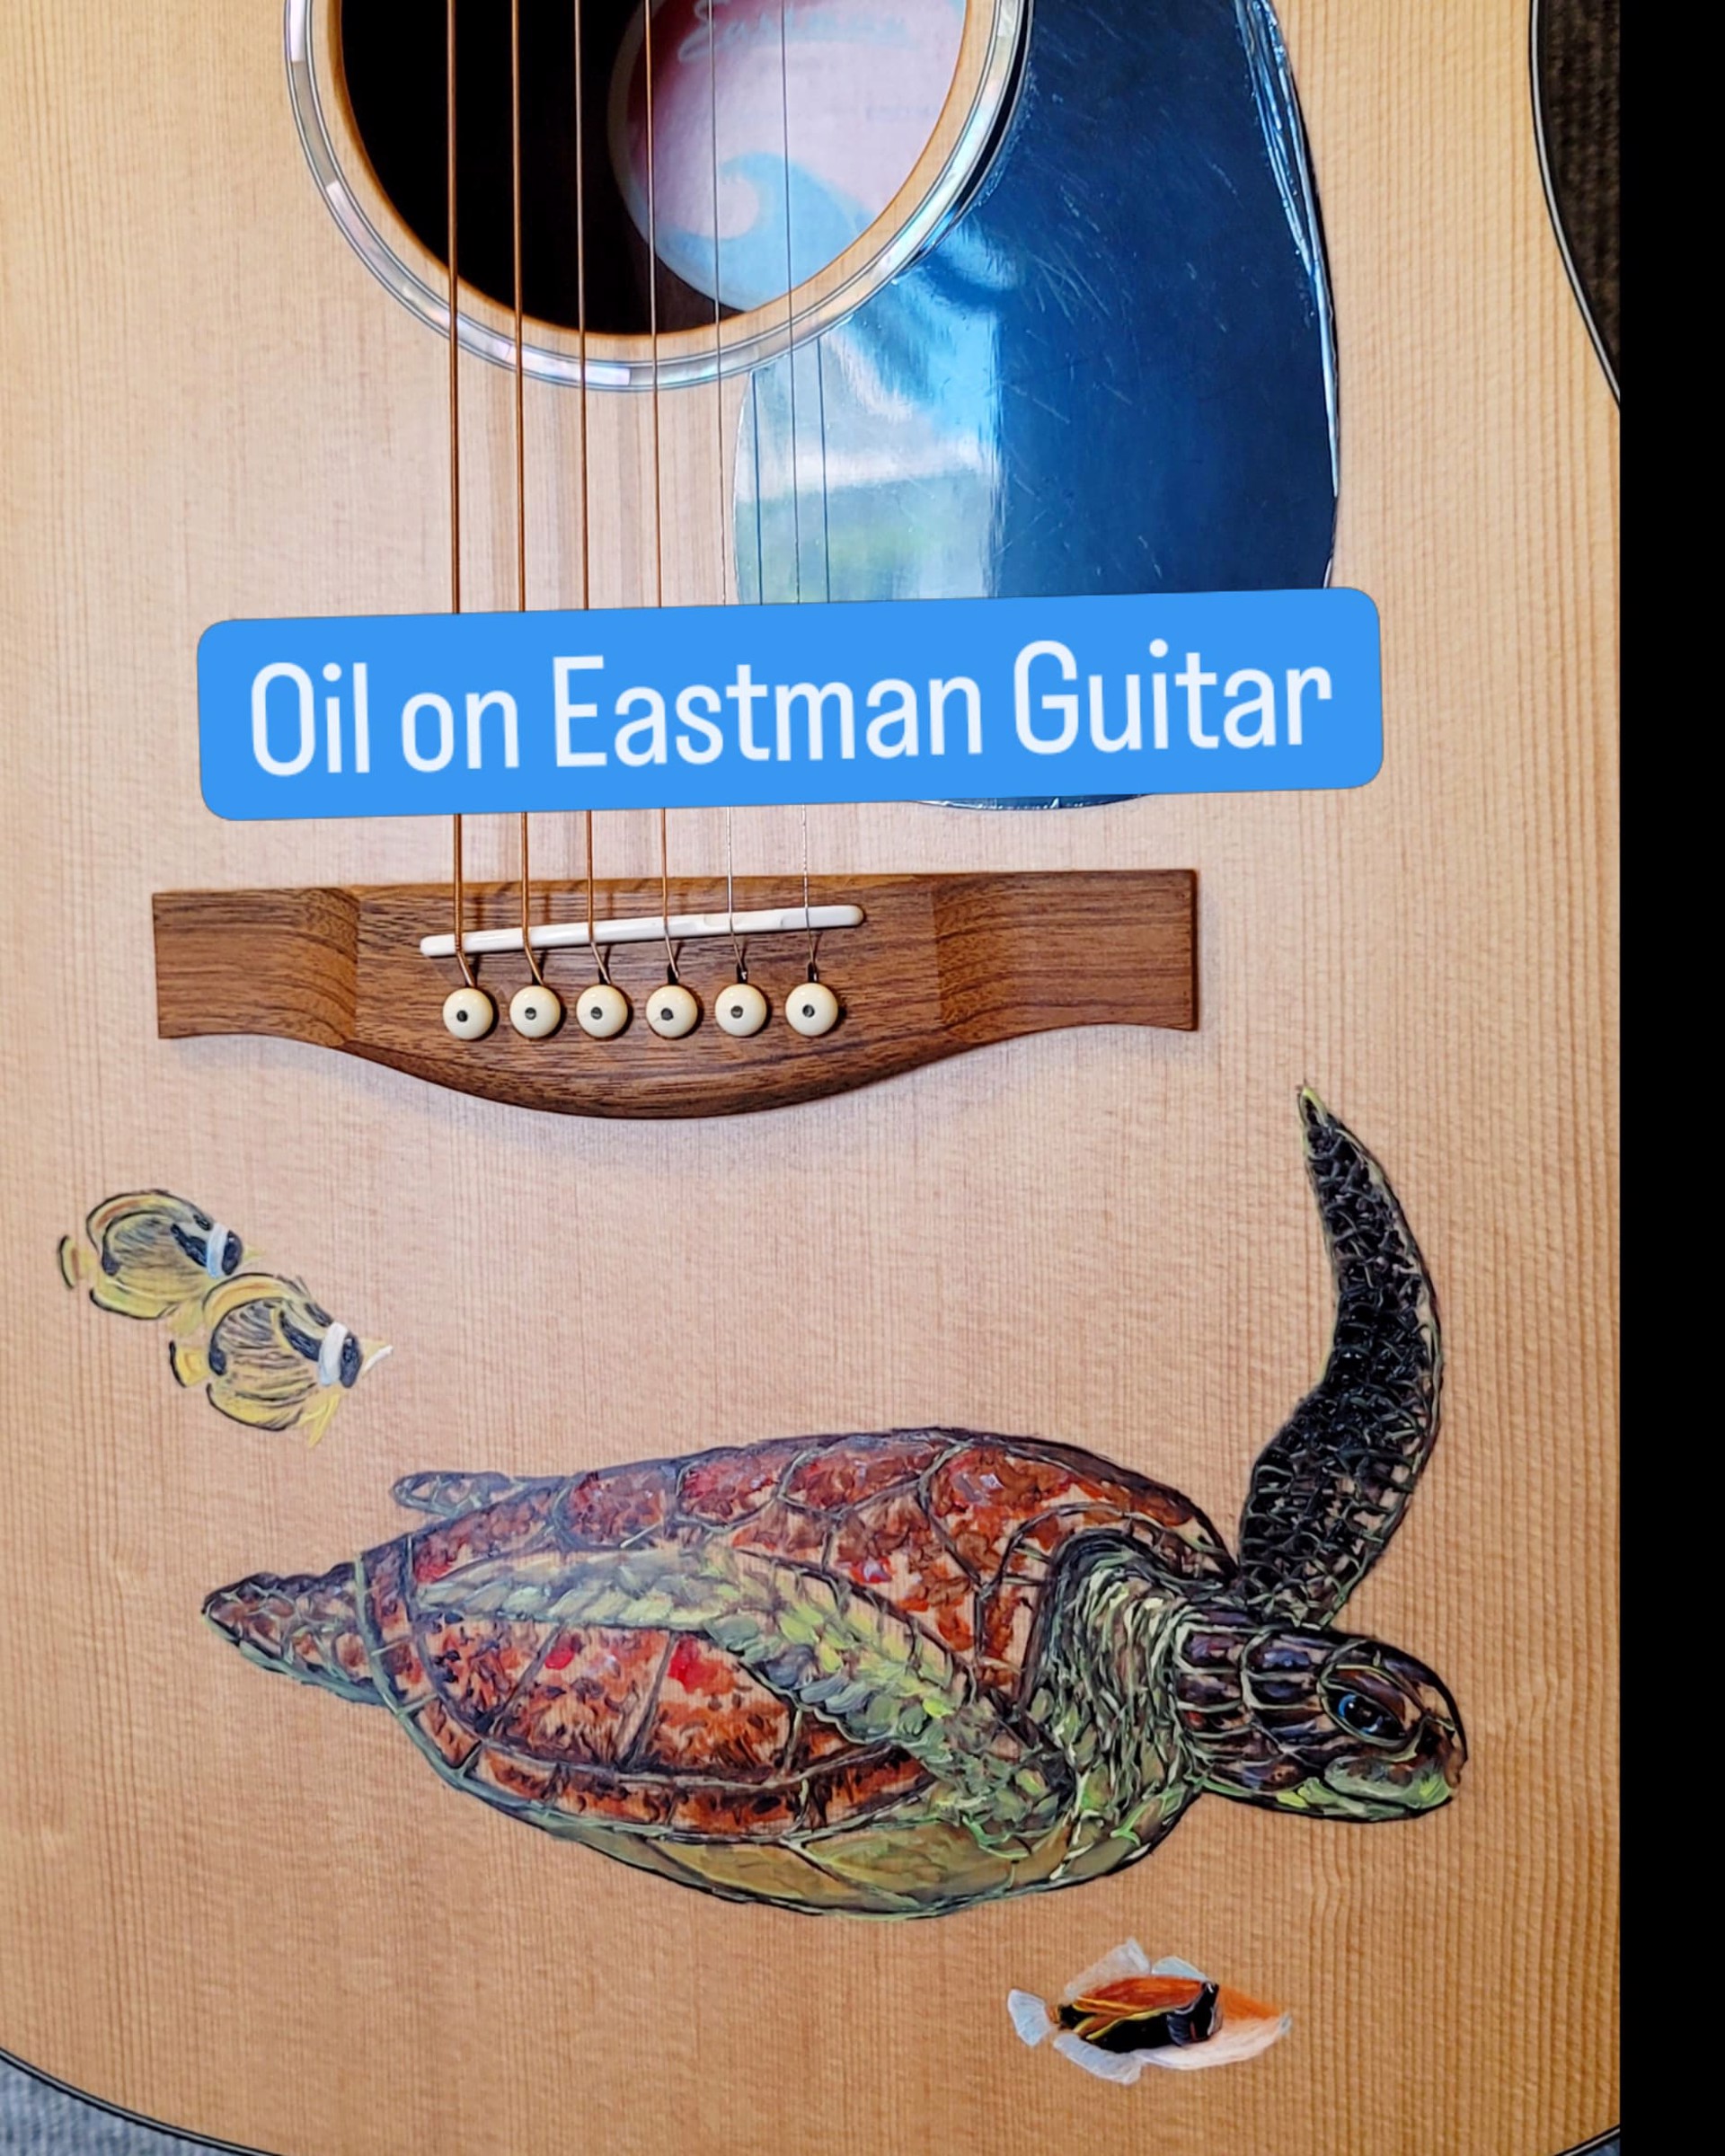 The Eastman Acoustic Guitar by Deen Garcia